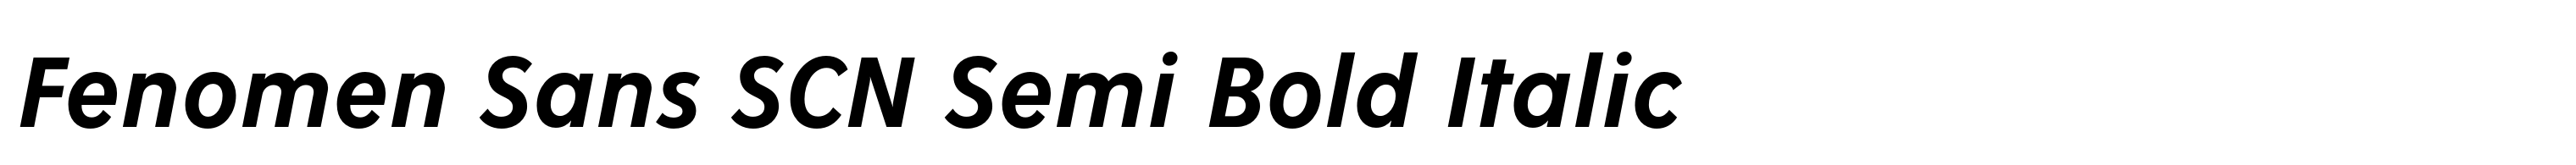 Fenomen Sans SCN Semi Bold Italic